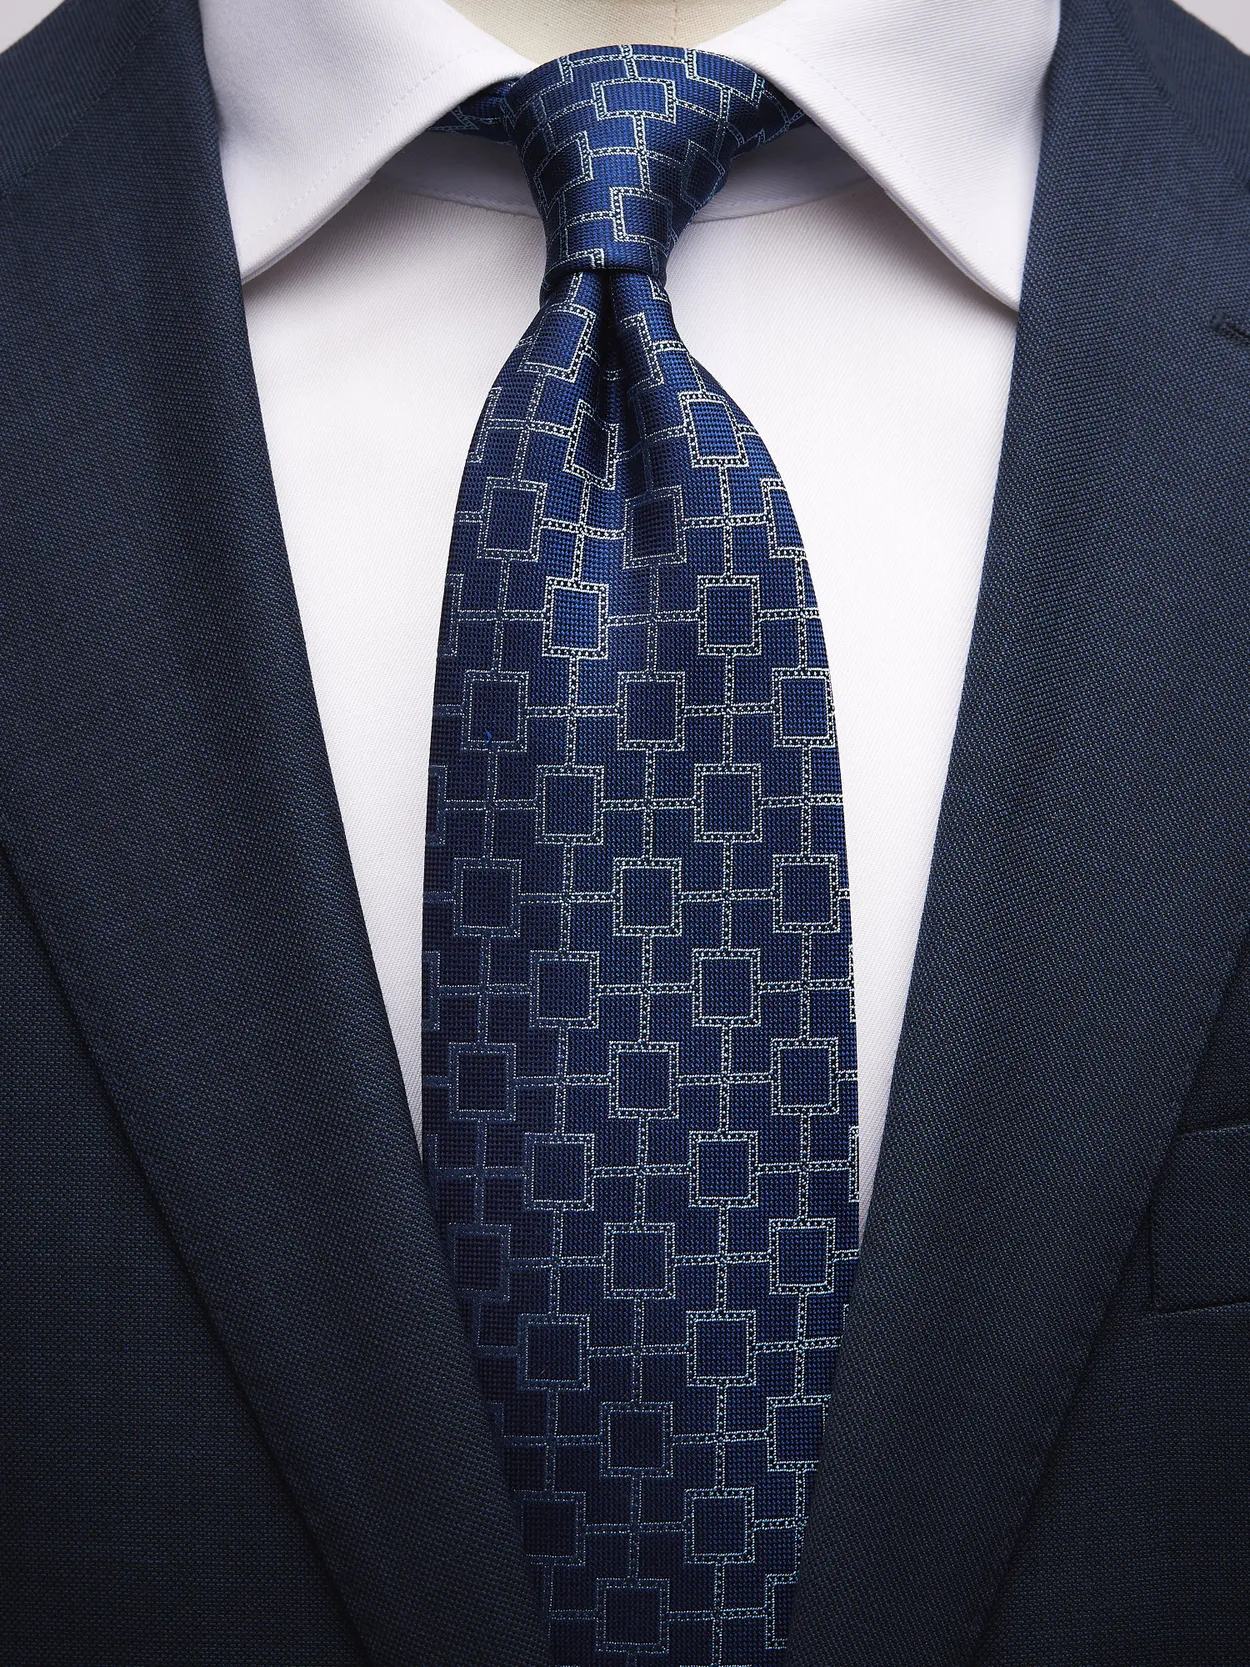 Blue & Light Blue Tie Geometric